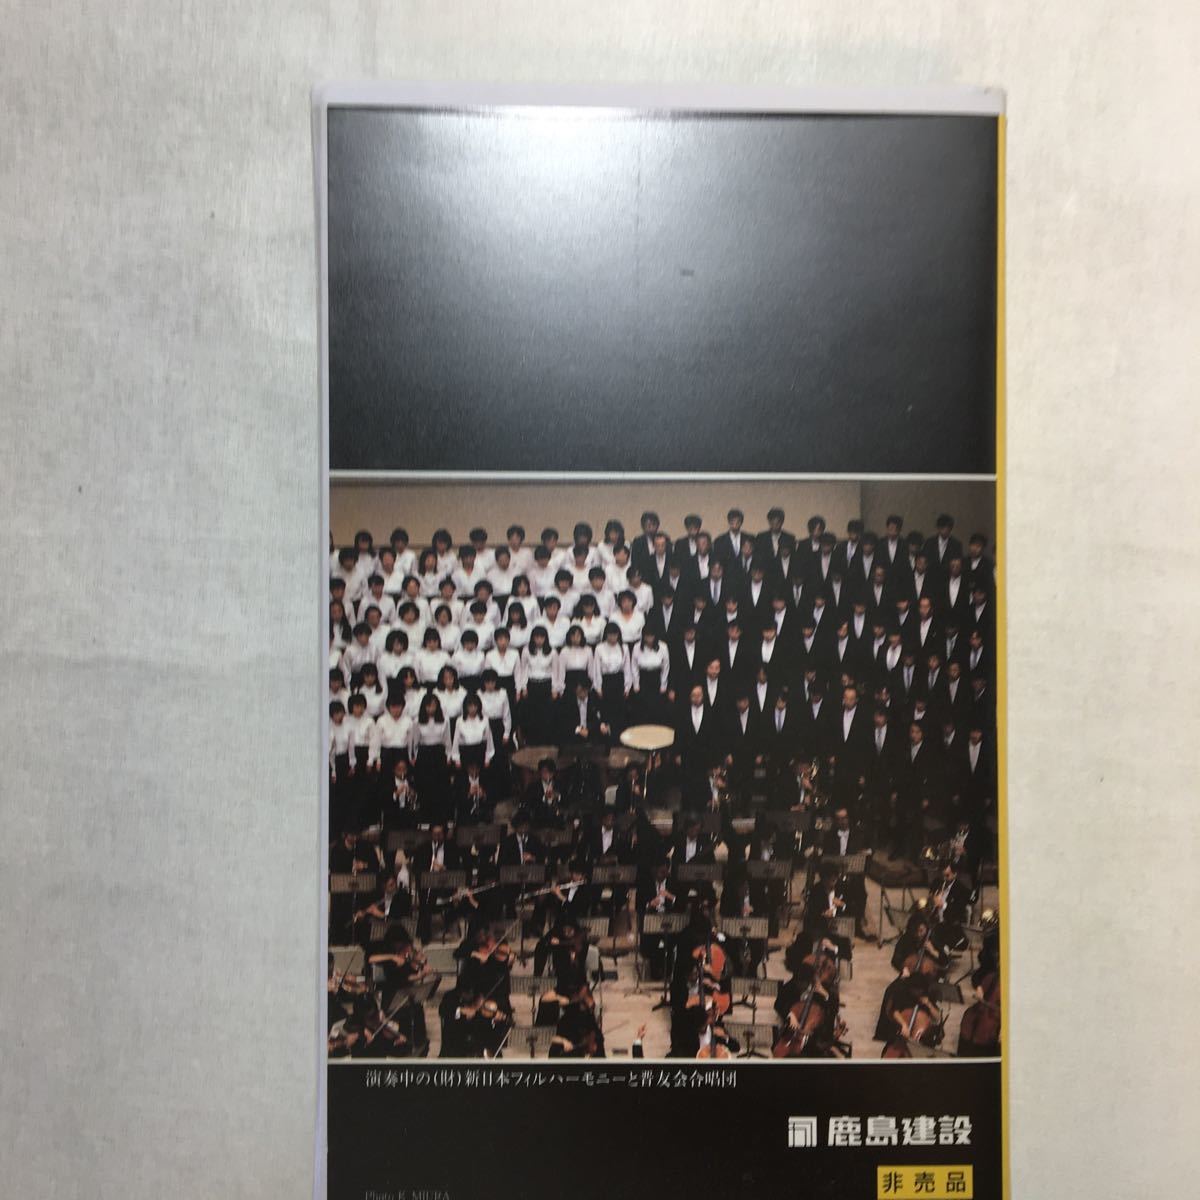 zvd-02♪朝比奈隆指揮/ 新日本フィルハーモニー交響楽団　ベートーヴェン 交響曲全集『第9番合唱付 』 [VHS] 100分 1997年非売品